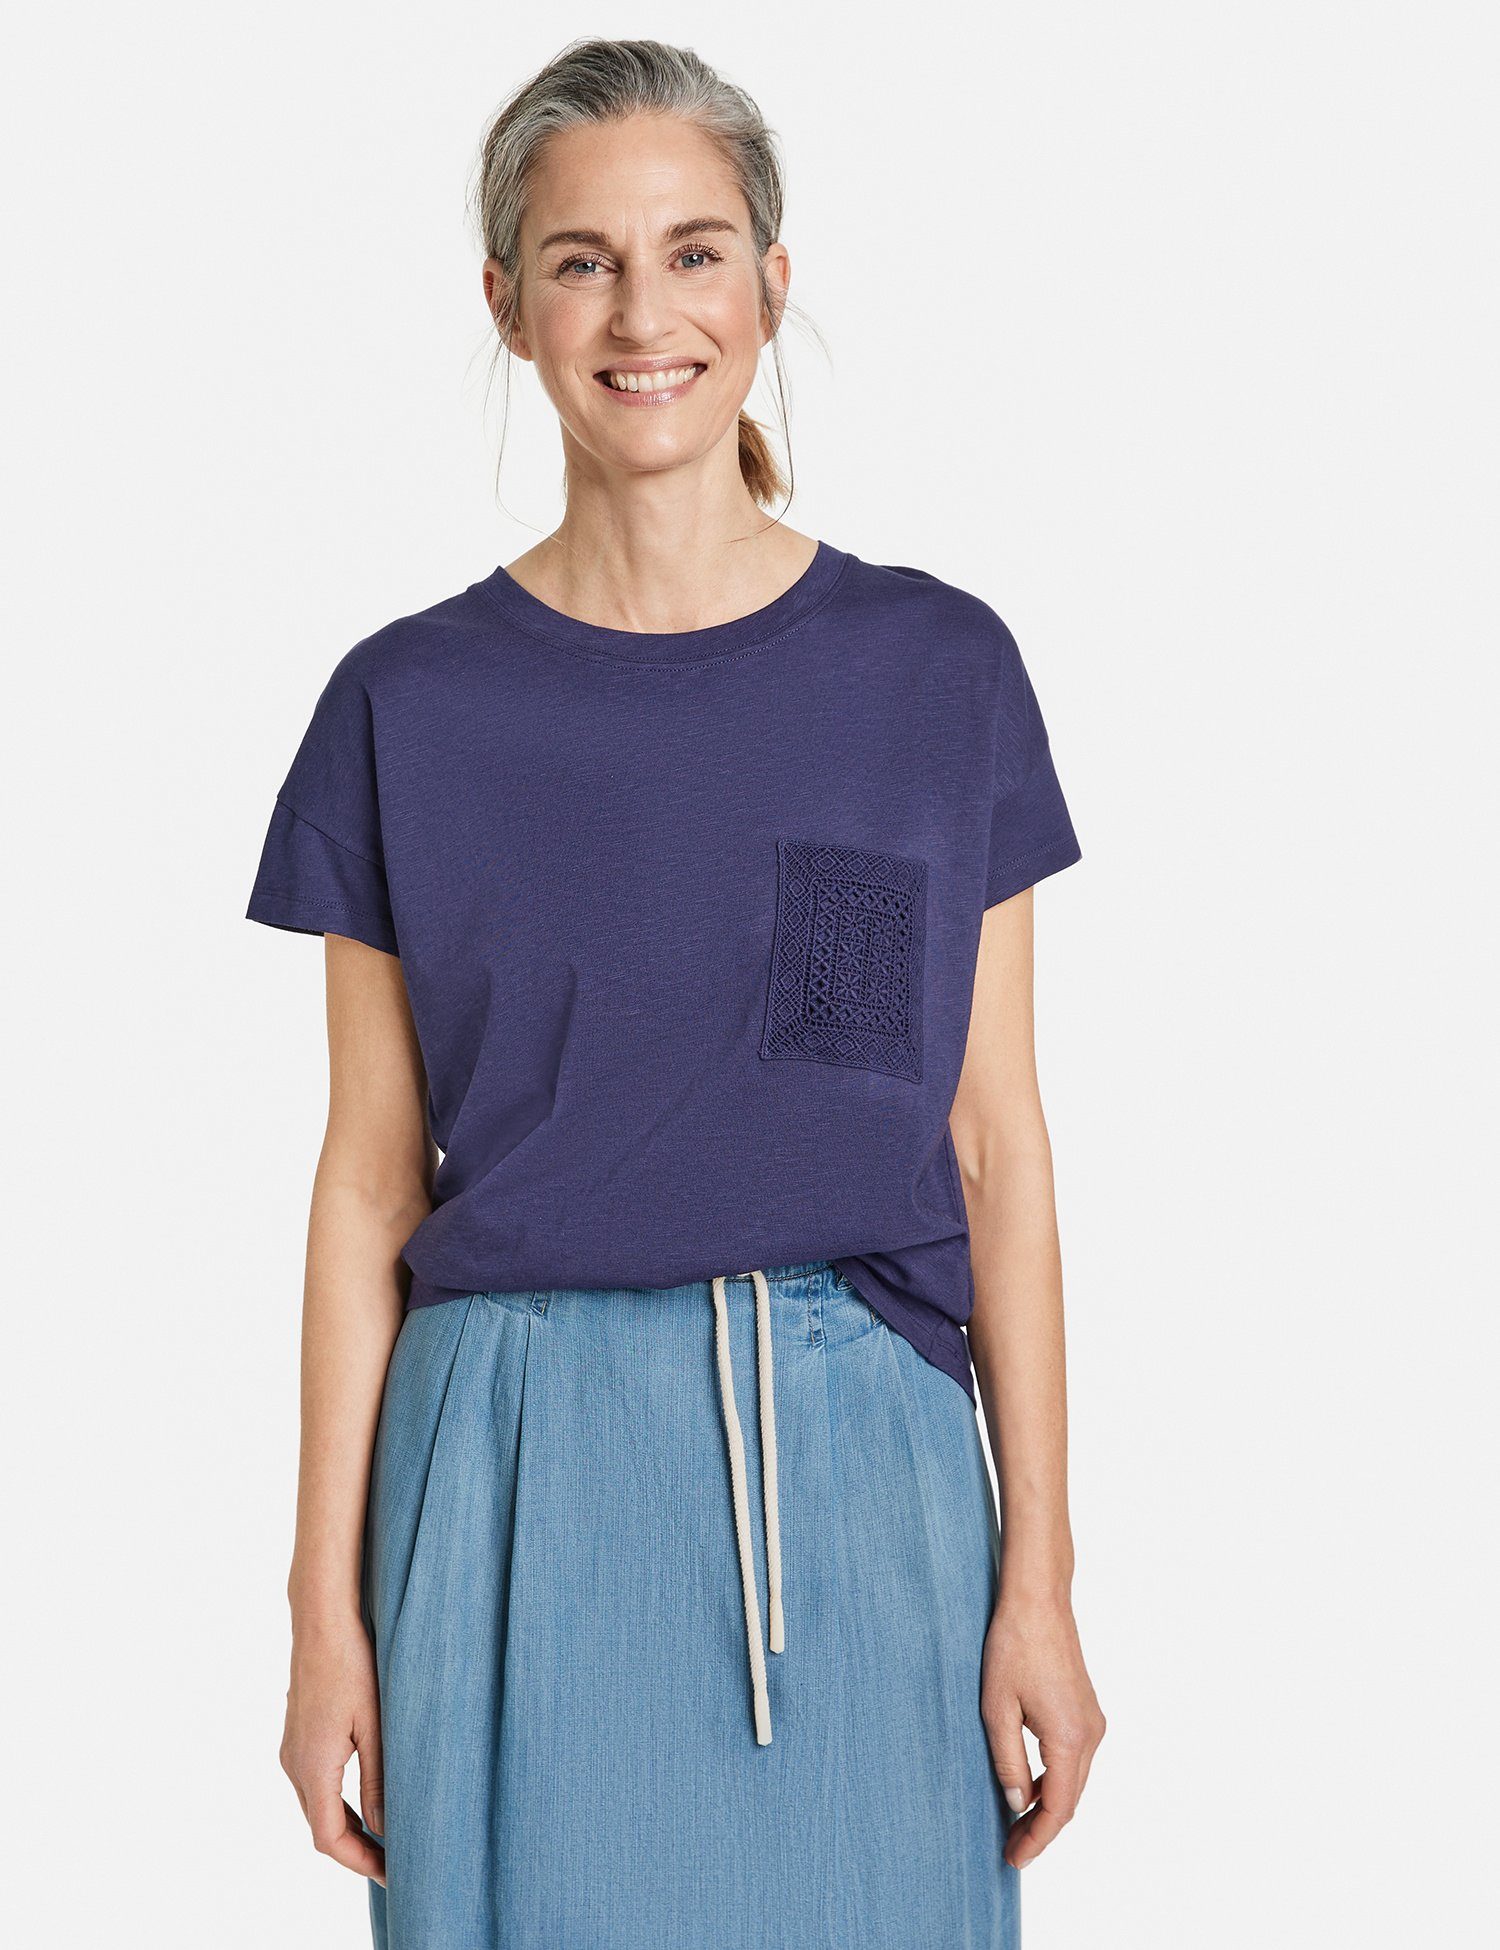 GERRY WEBER Kurzarmshirt T-Shirt Häkel-Look Brusttasche mit im Blueberry